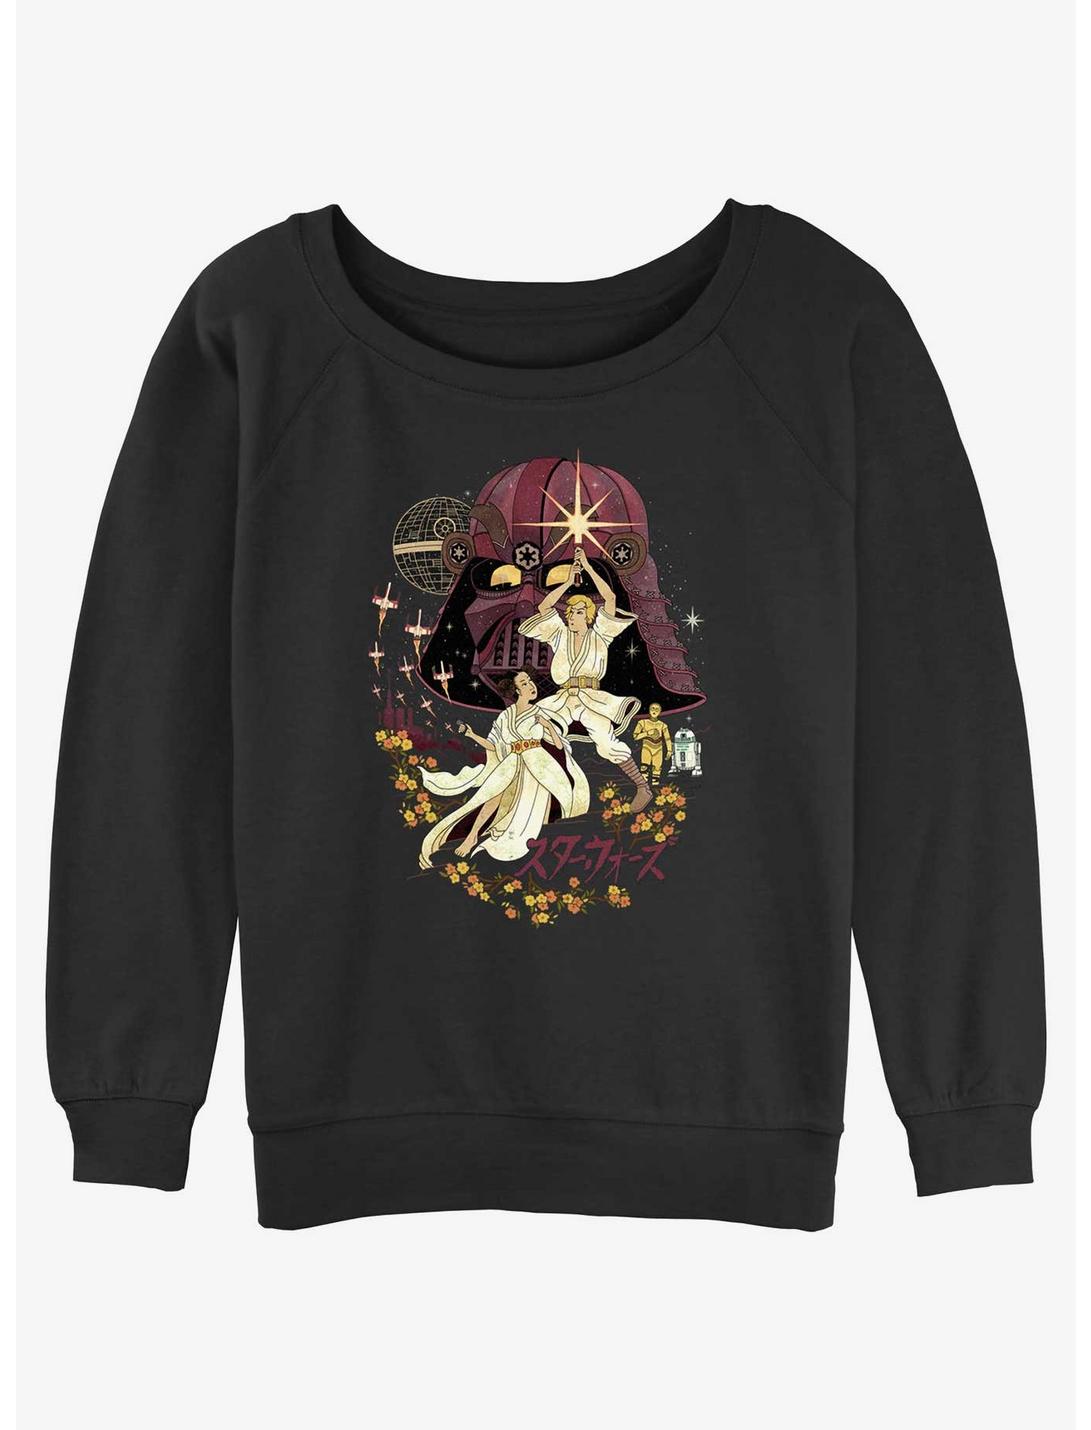 Star Wars Japanese Art Inspired Two Hopes Luke and Leia Womens Slouchy Sweatshirt, BLACK, hi-res